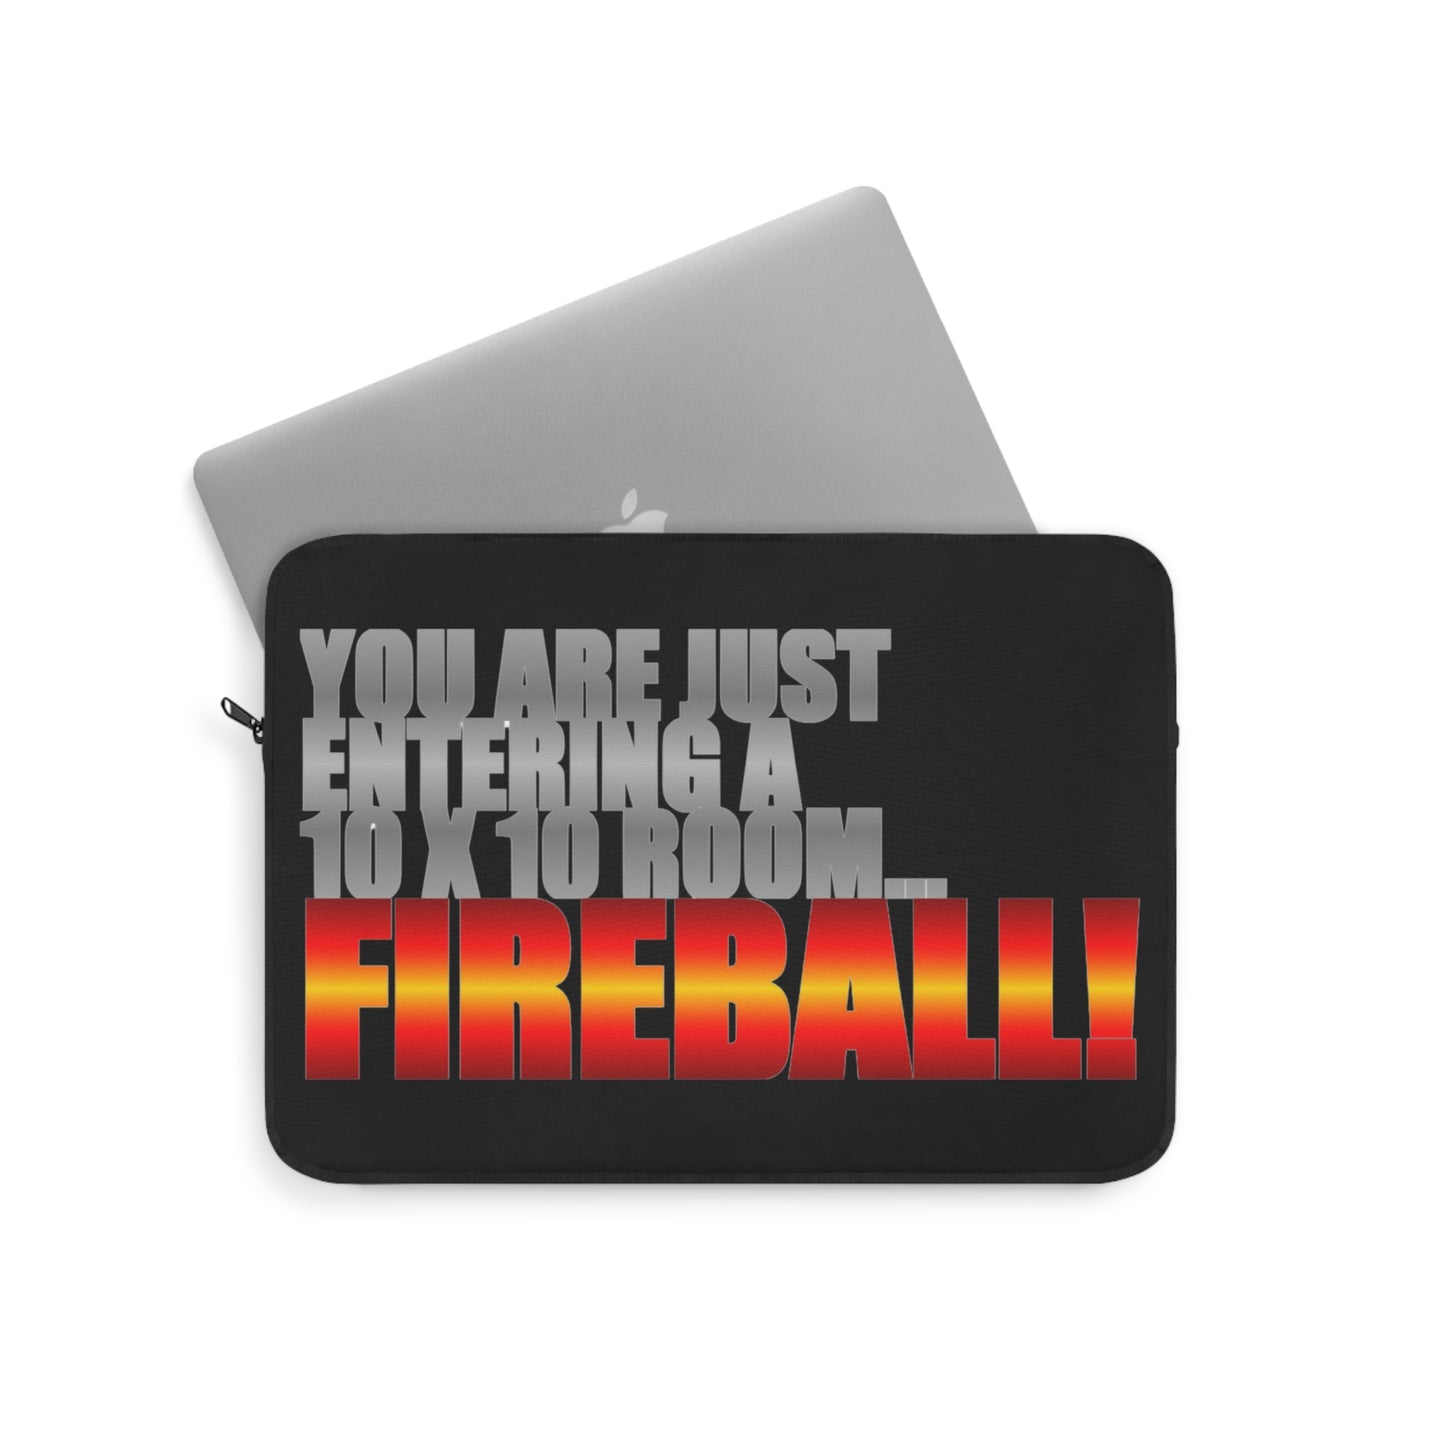 Fireball! Laptop Sleeve